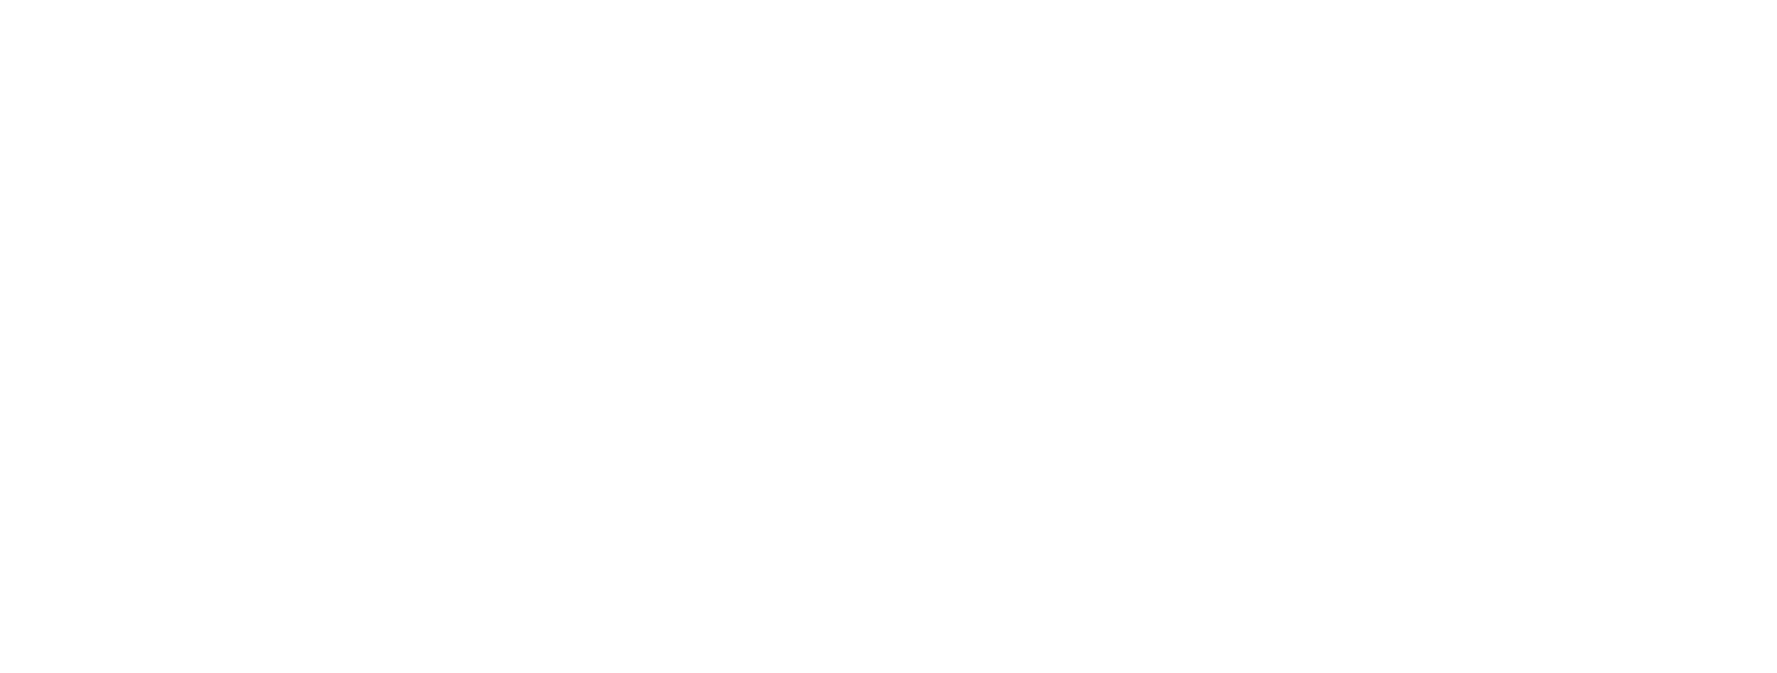 Pooneh Joharchi